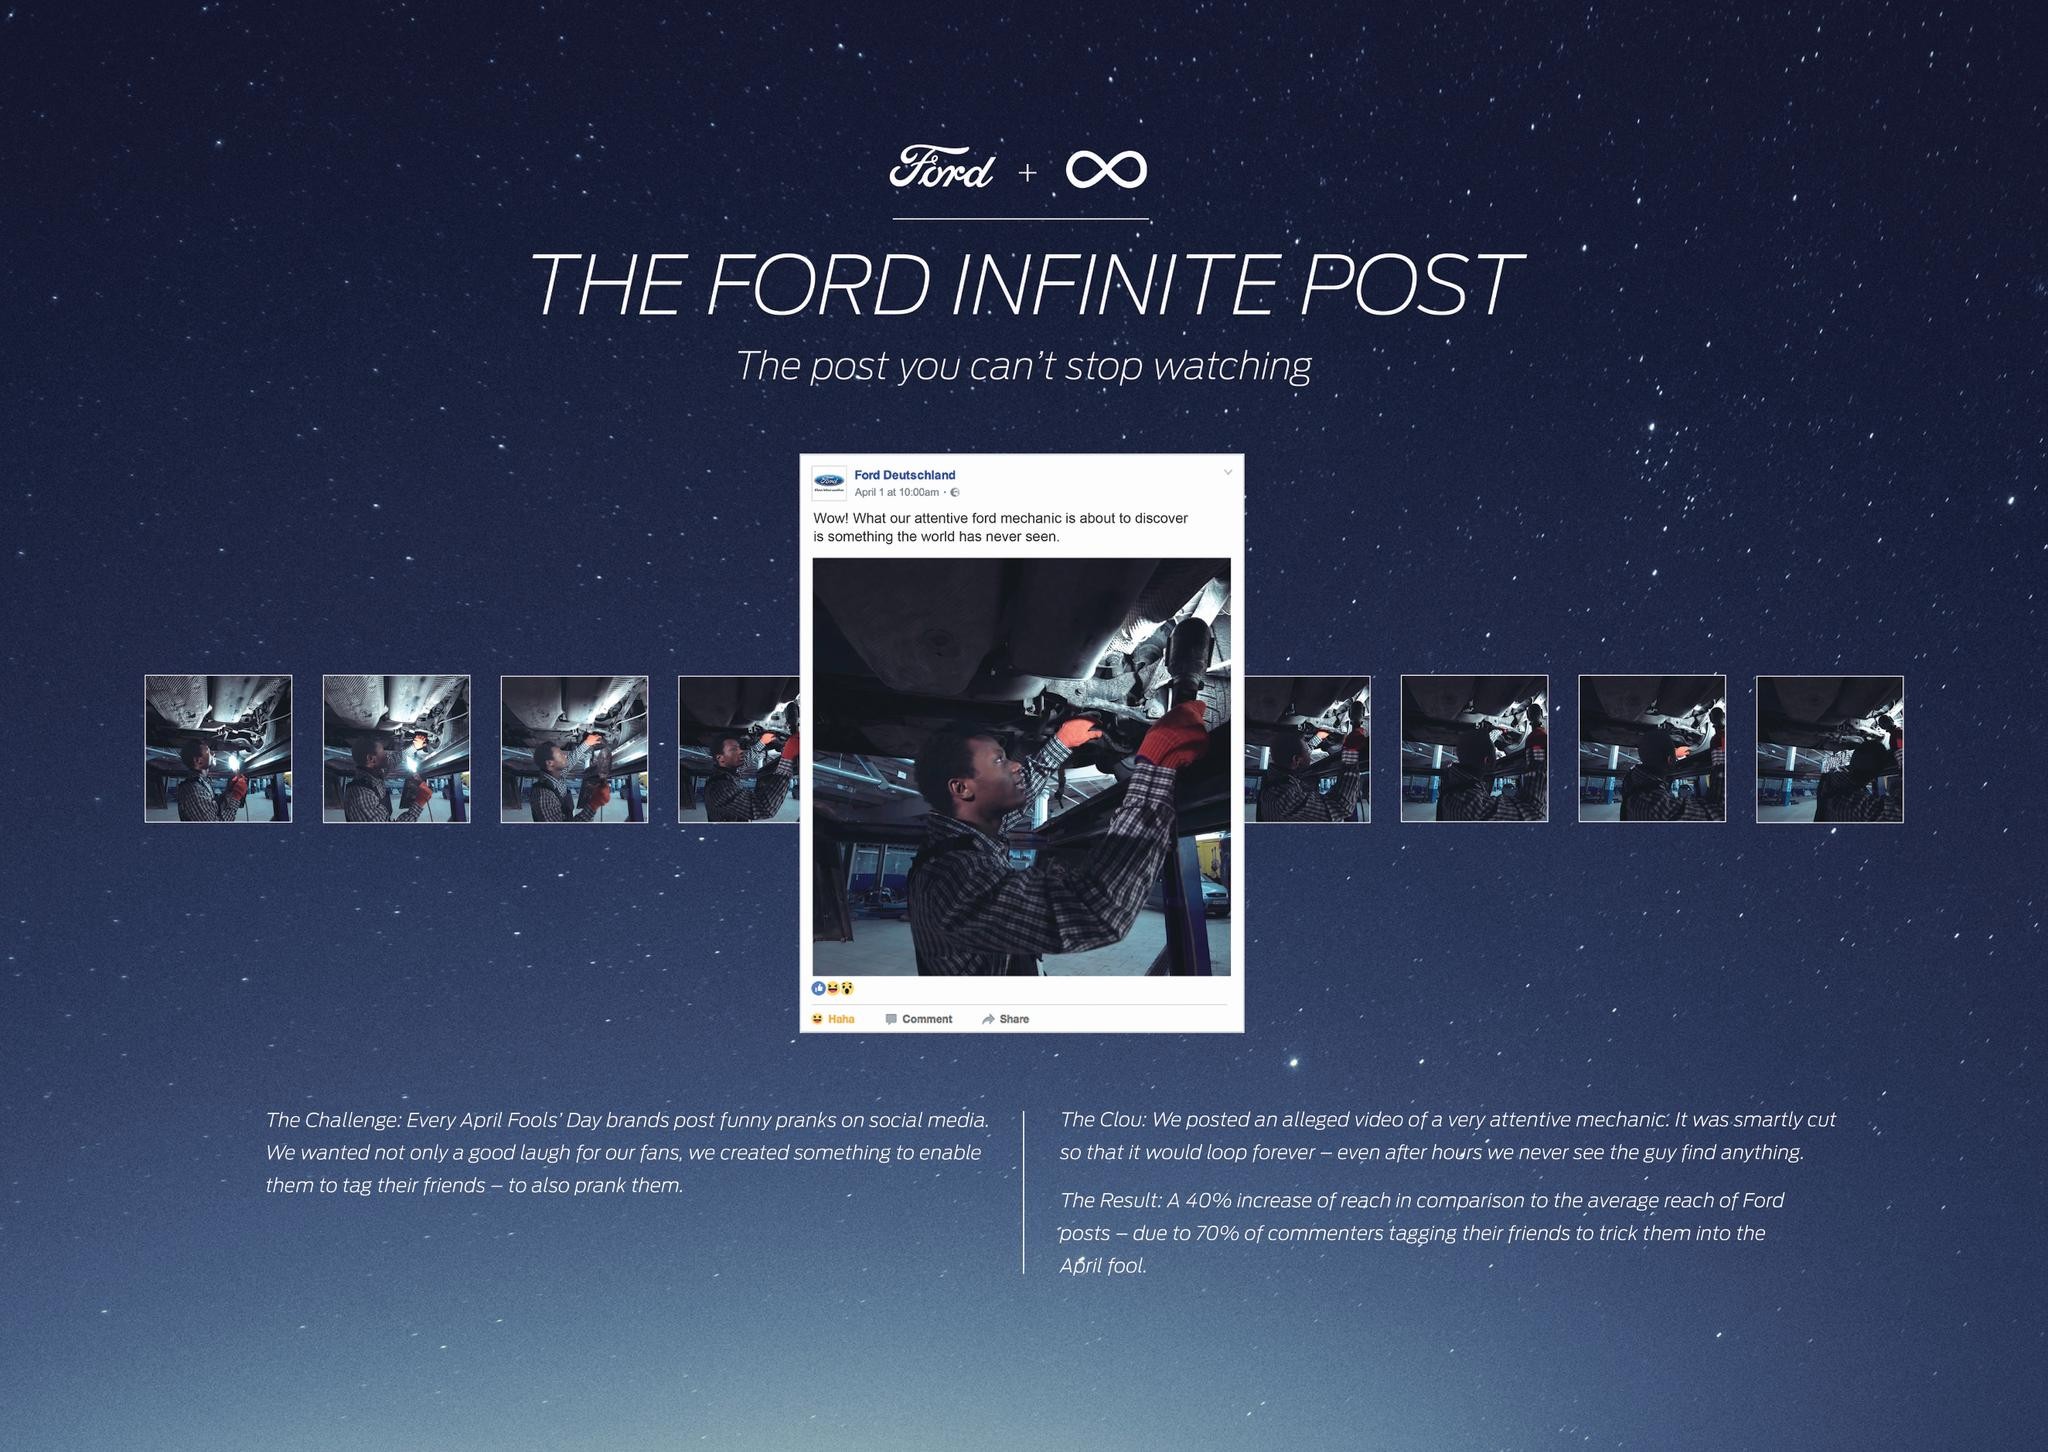 Ford infinite post